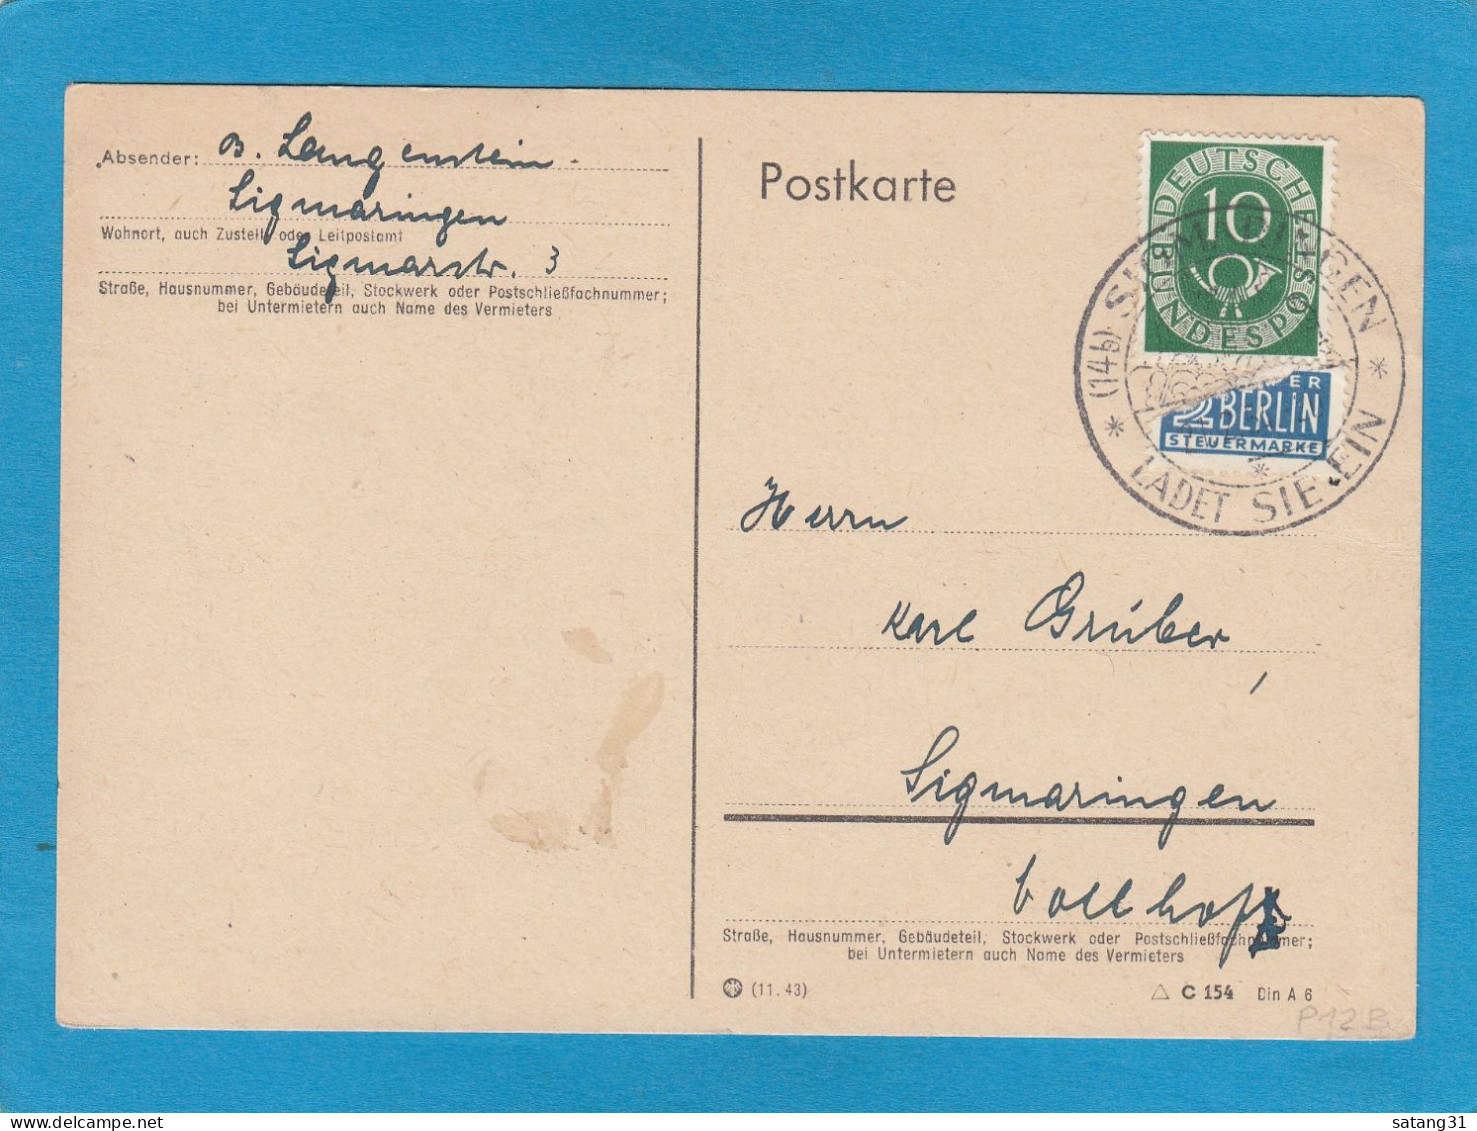 ORTSKARTE AUS SIGMARINGEN,1954. - Covers & Documents